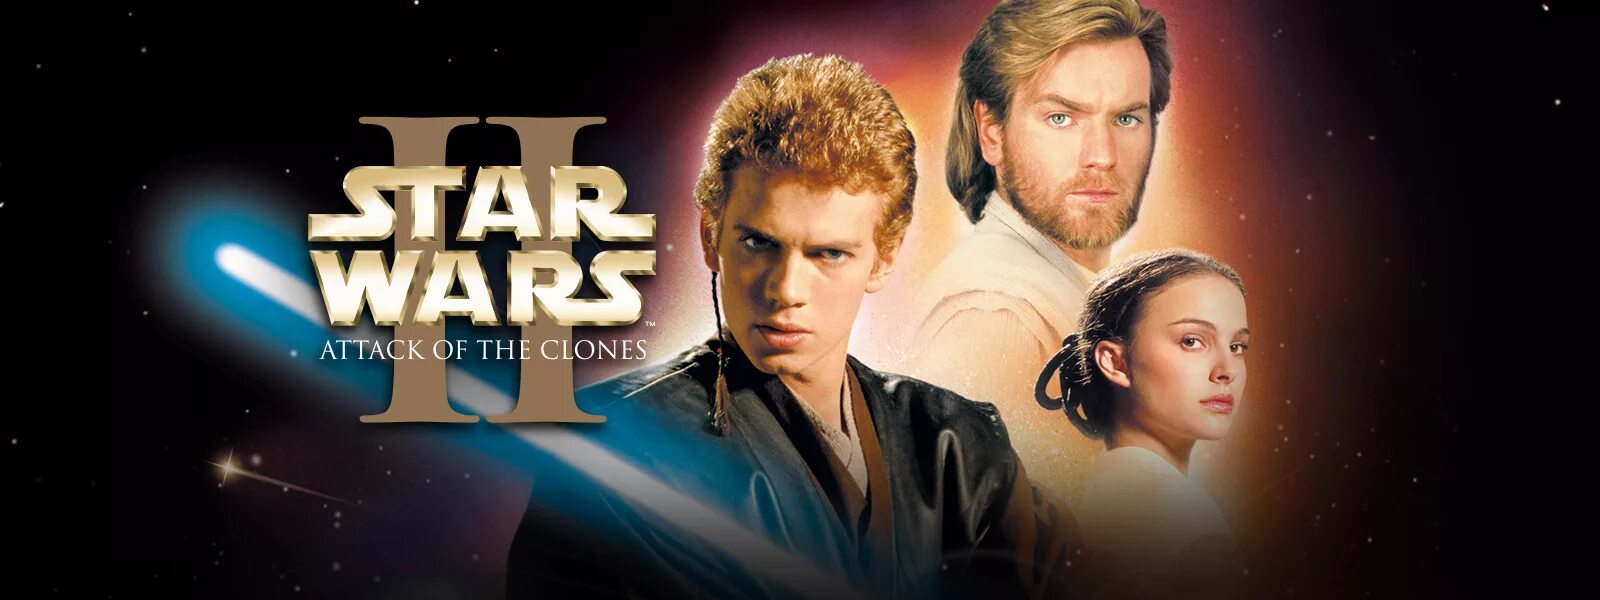 Звёздные войны: эпизод 2 — атака клонов (2002). Star Wars атака клонов 2002. Звёздные войны: эпизод 2 – атака клонов Роуз Бирн. Ii атака клонов